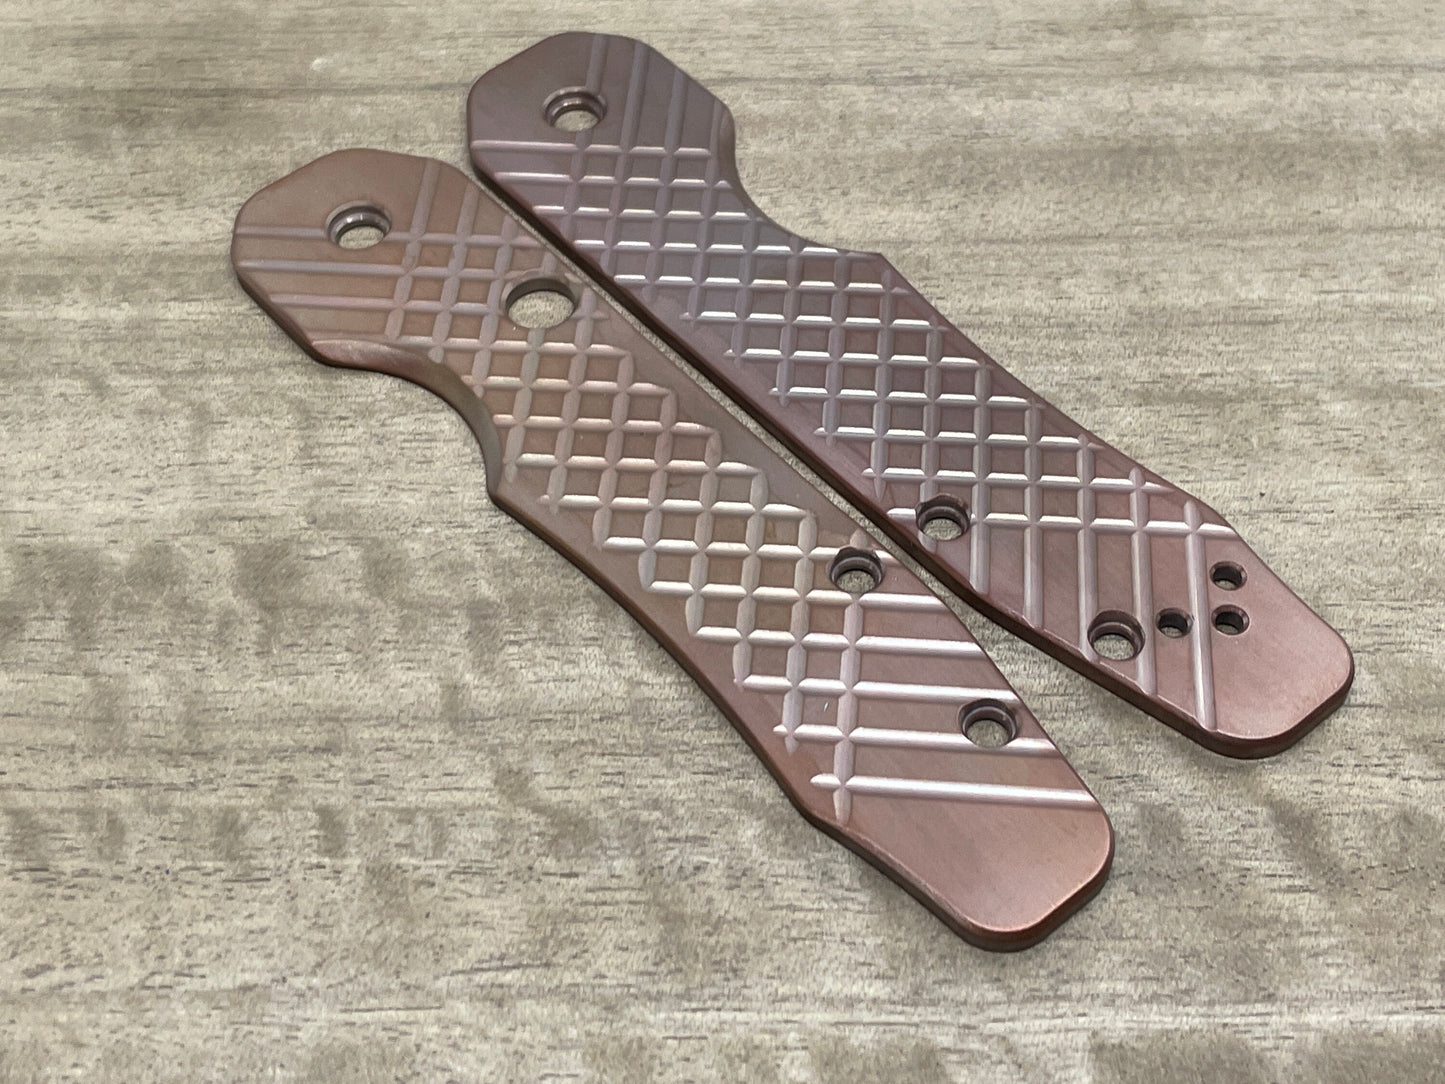 dark Copper FRAG milled Scales for Spyderco SMOCK